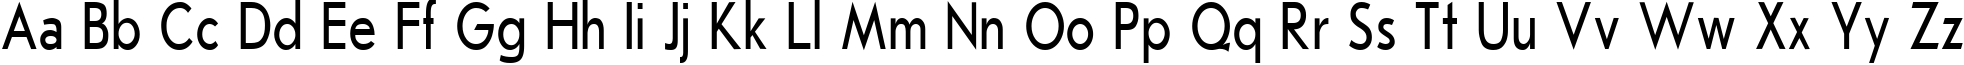 Пример написания английского алфавита шрифтом Journal SansSerif Plain:001.00175nh